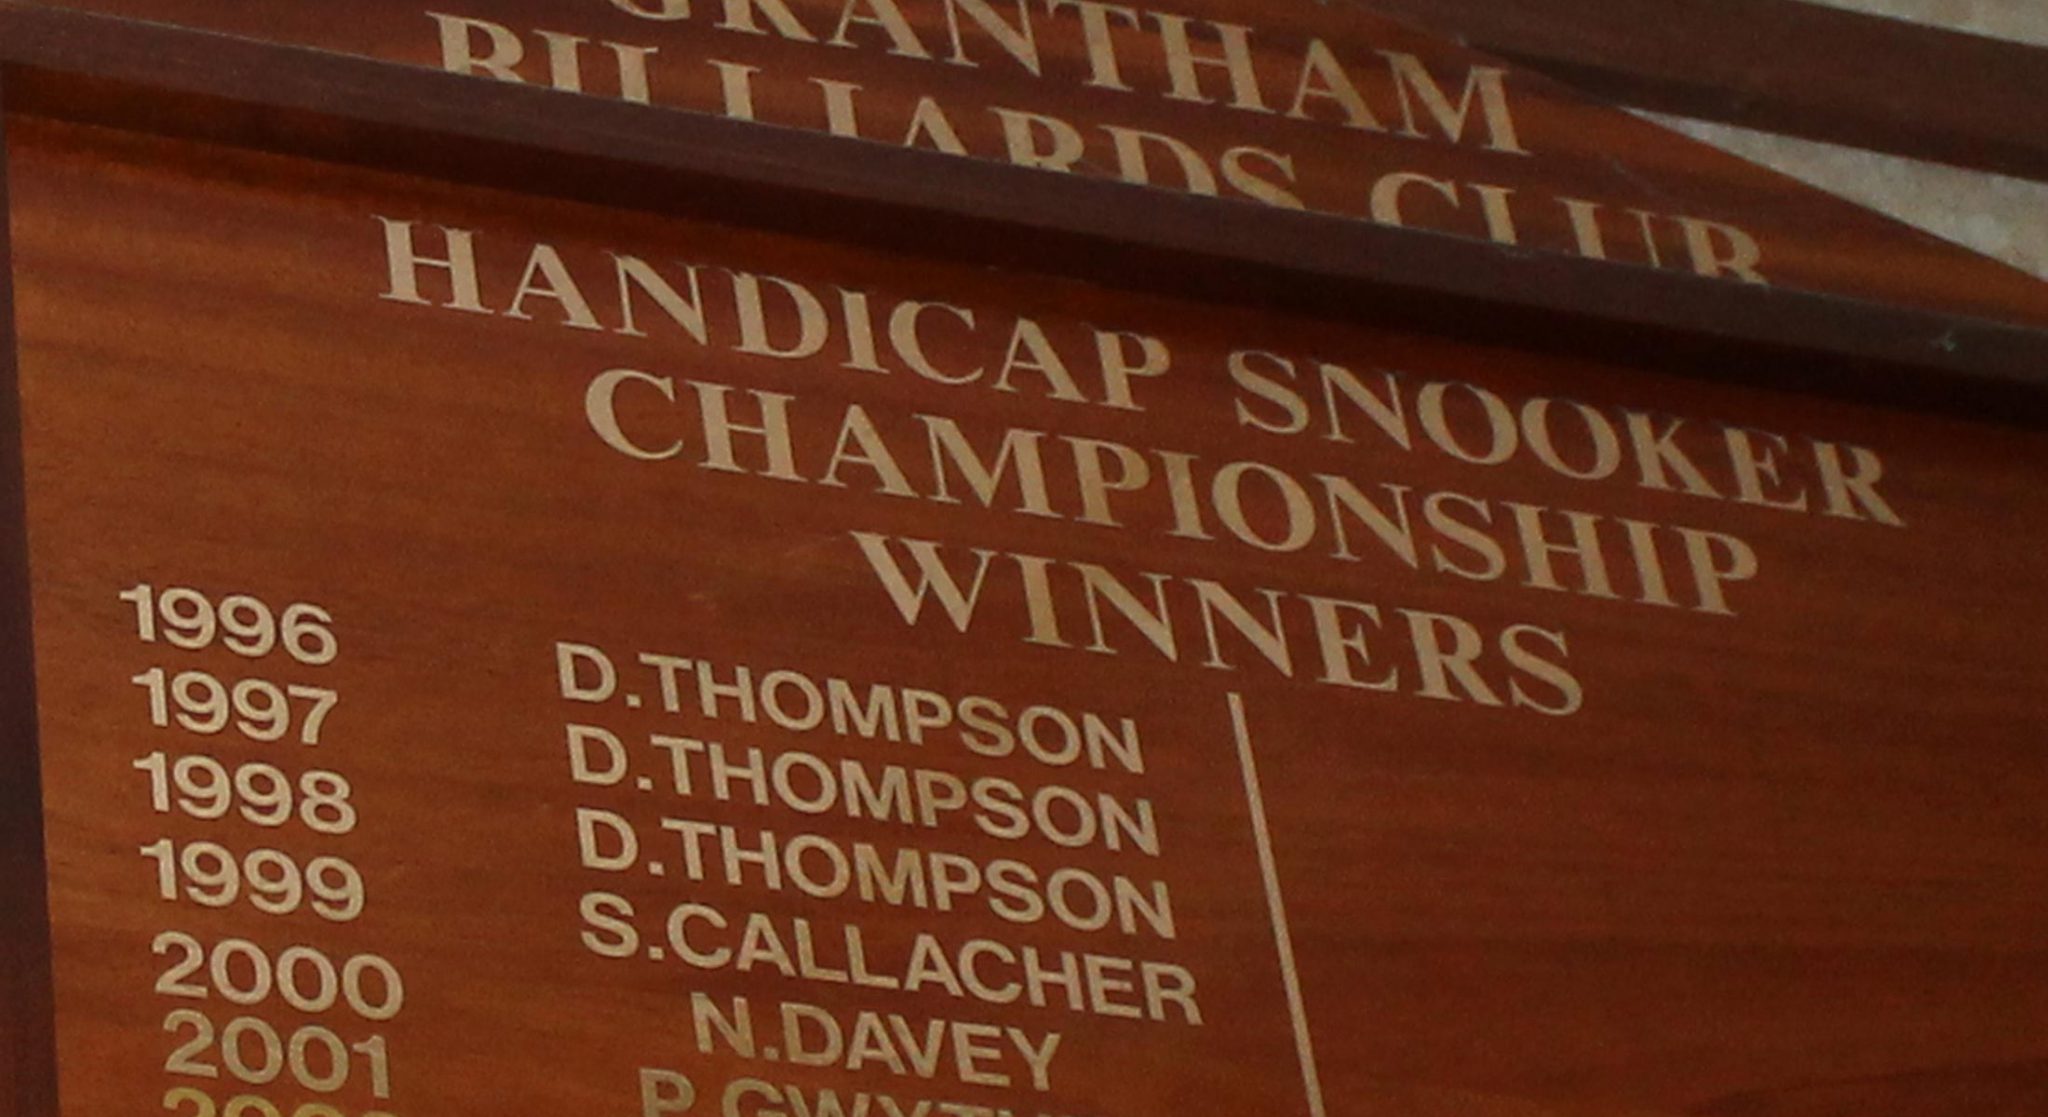 Handicap Snooker Championship Winners